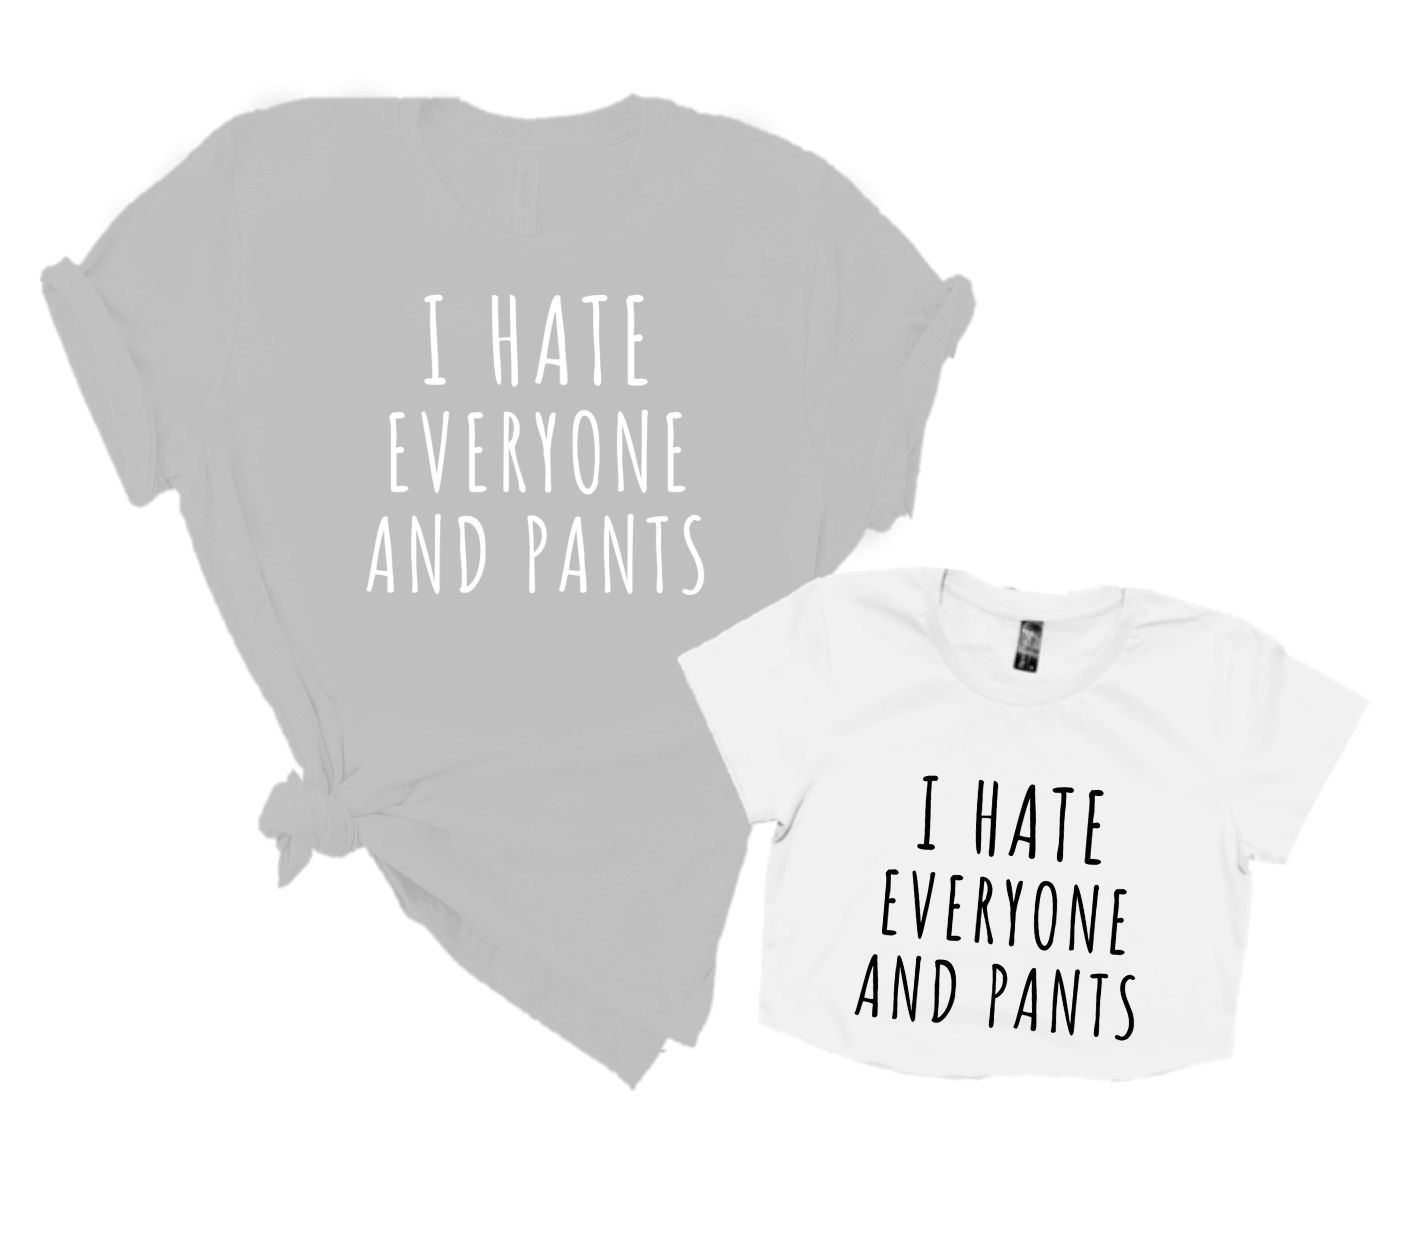 I HATE EVERYONE AND PANTS